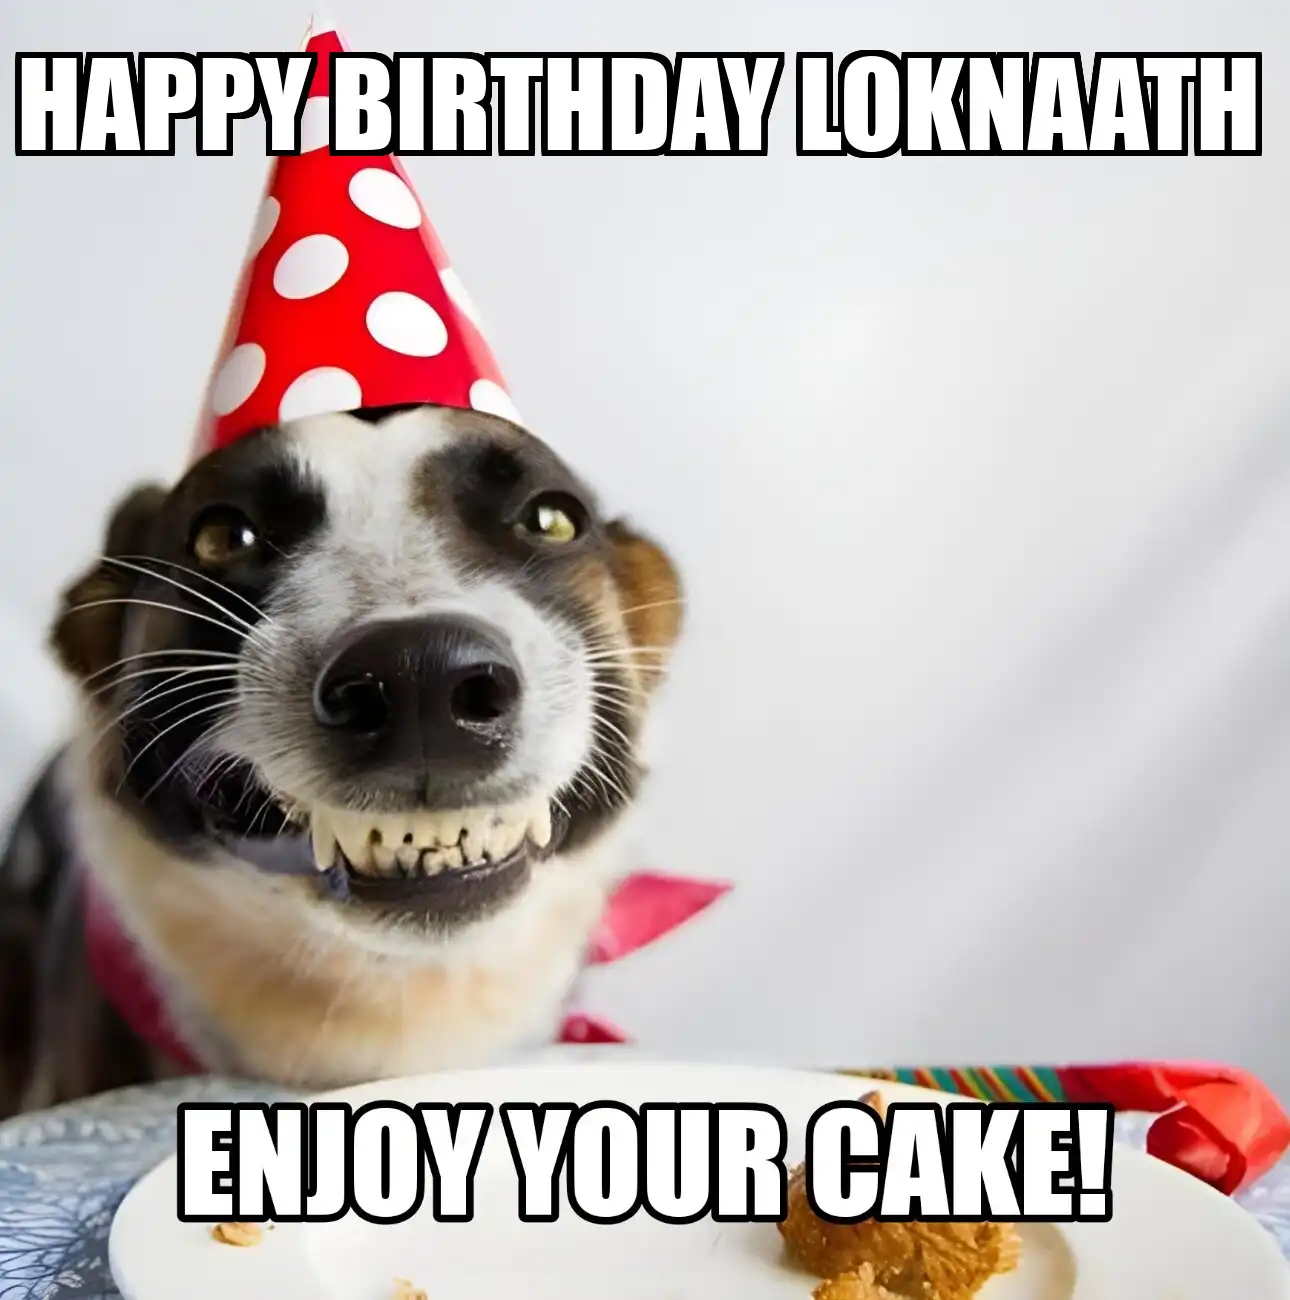 Happy Birthday Loknaath Enjoy Your Cake Dog Meme